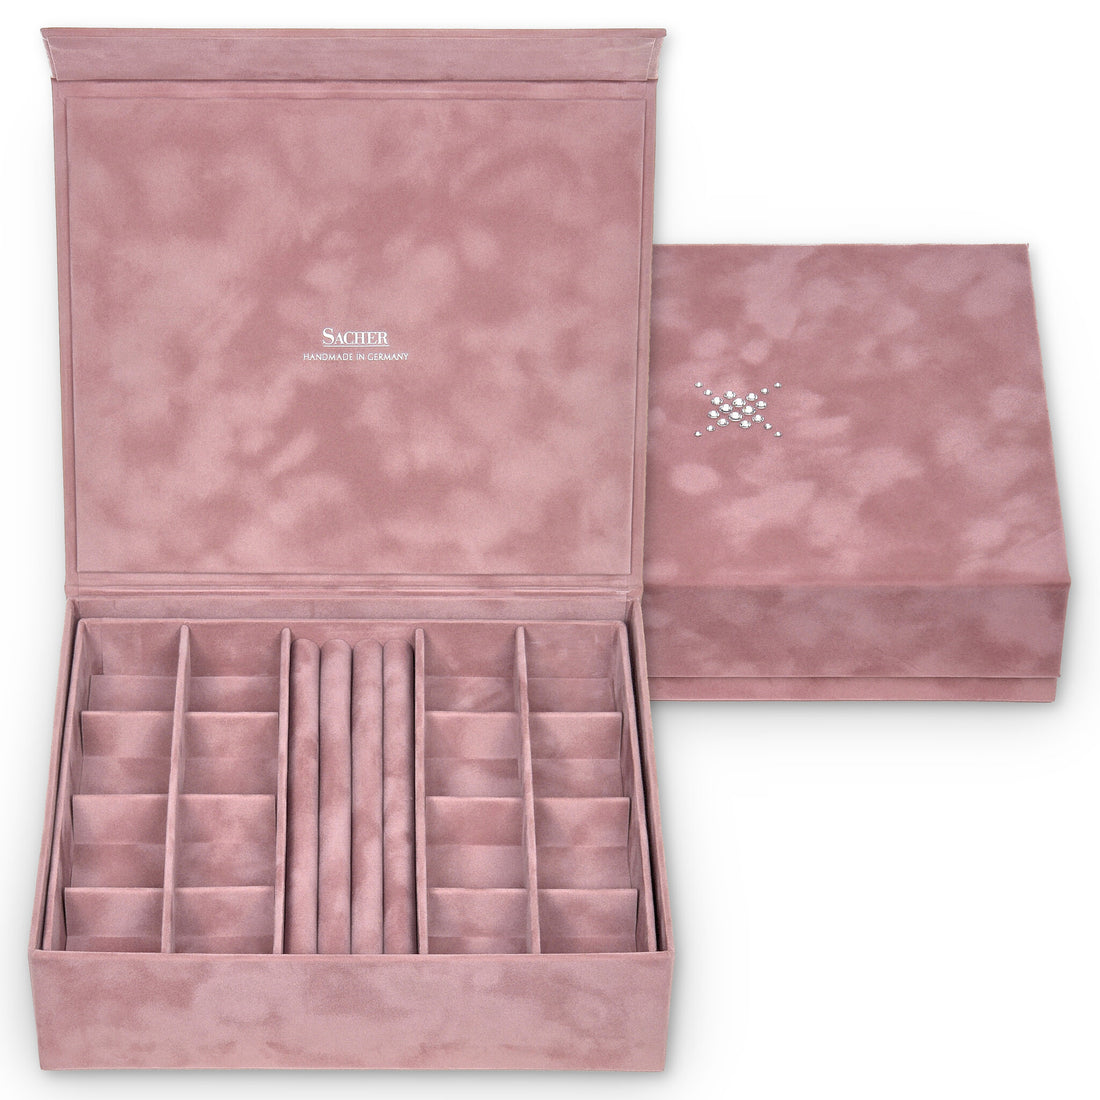 Schmuckbox Nora crystalo rosé | – Store Offizieller / alt SACHER 1846 Manufaktur